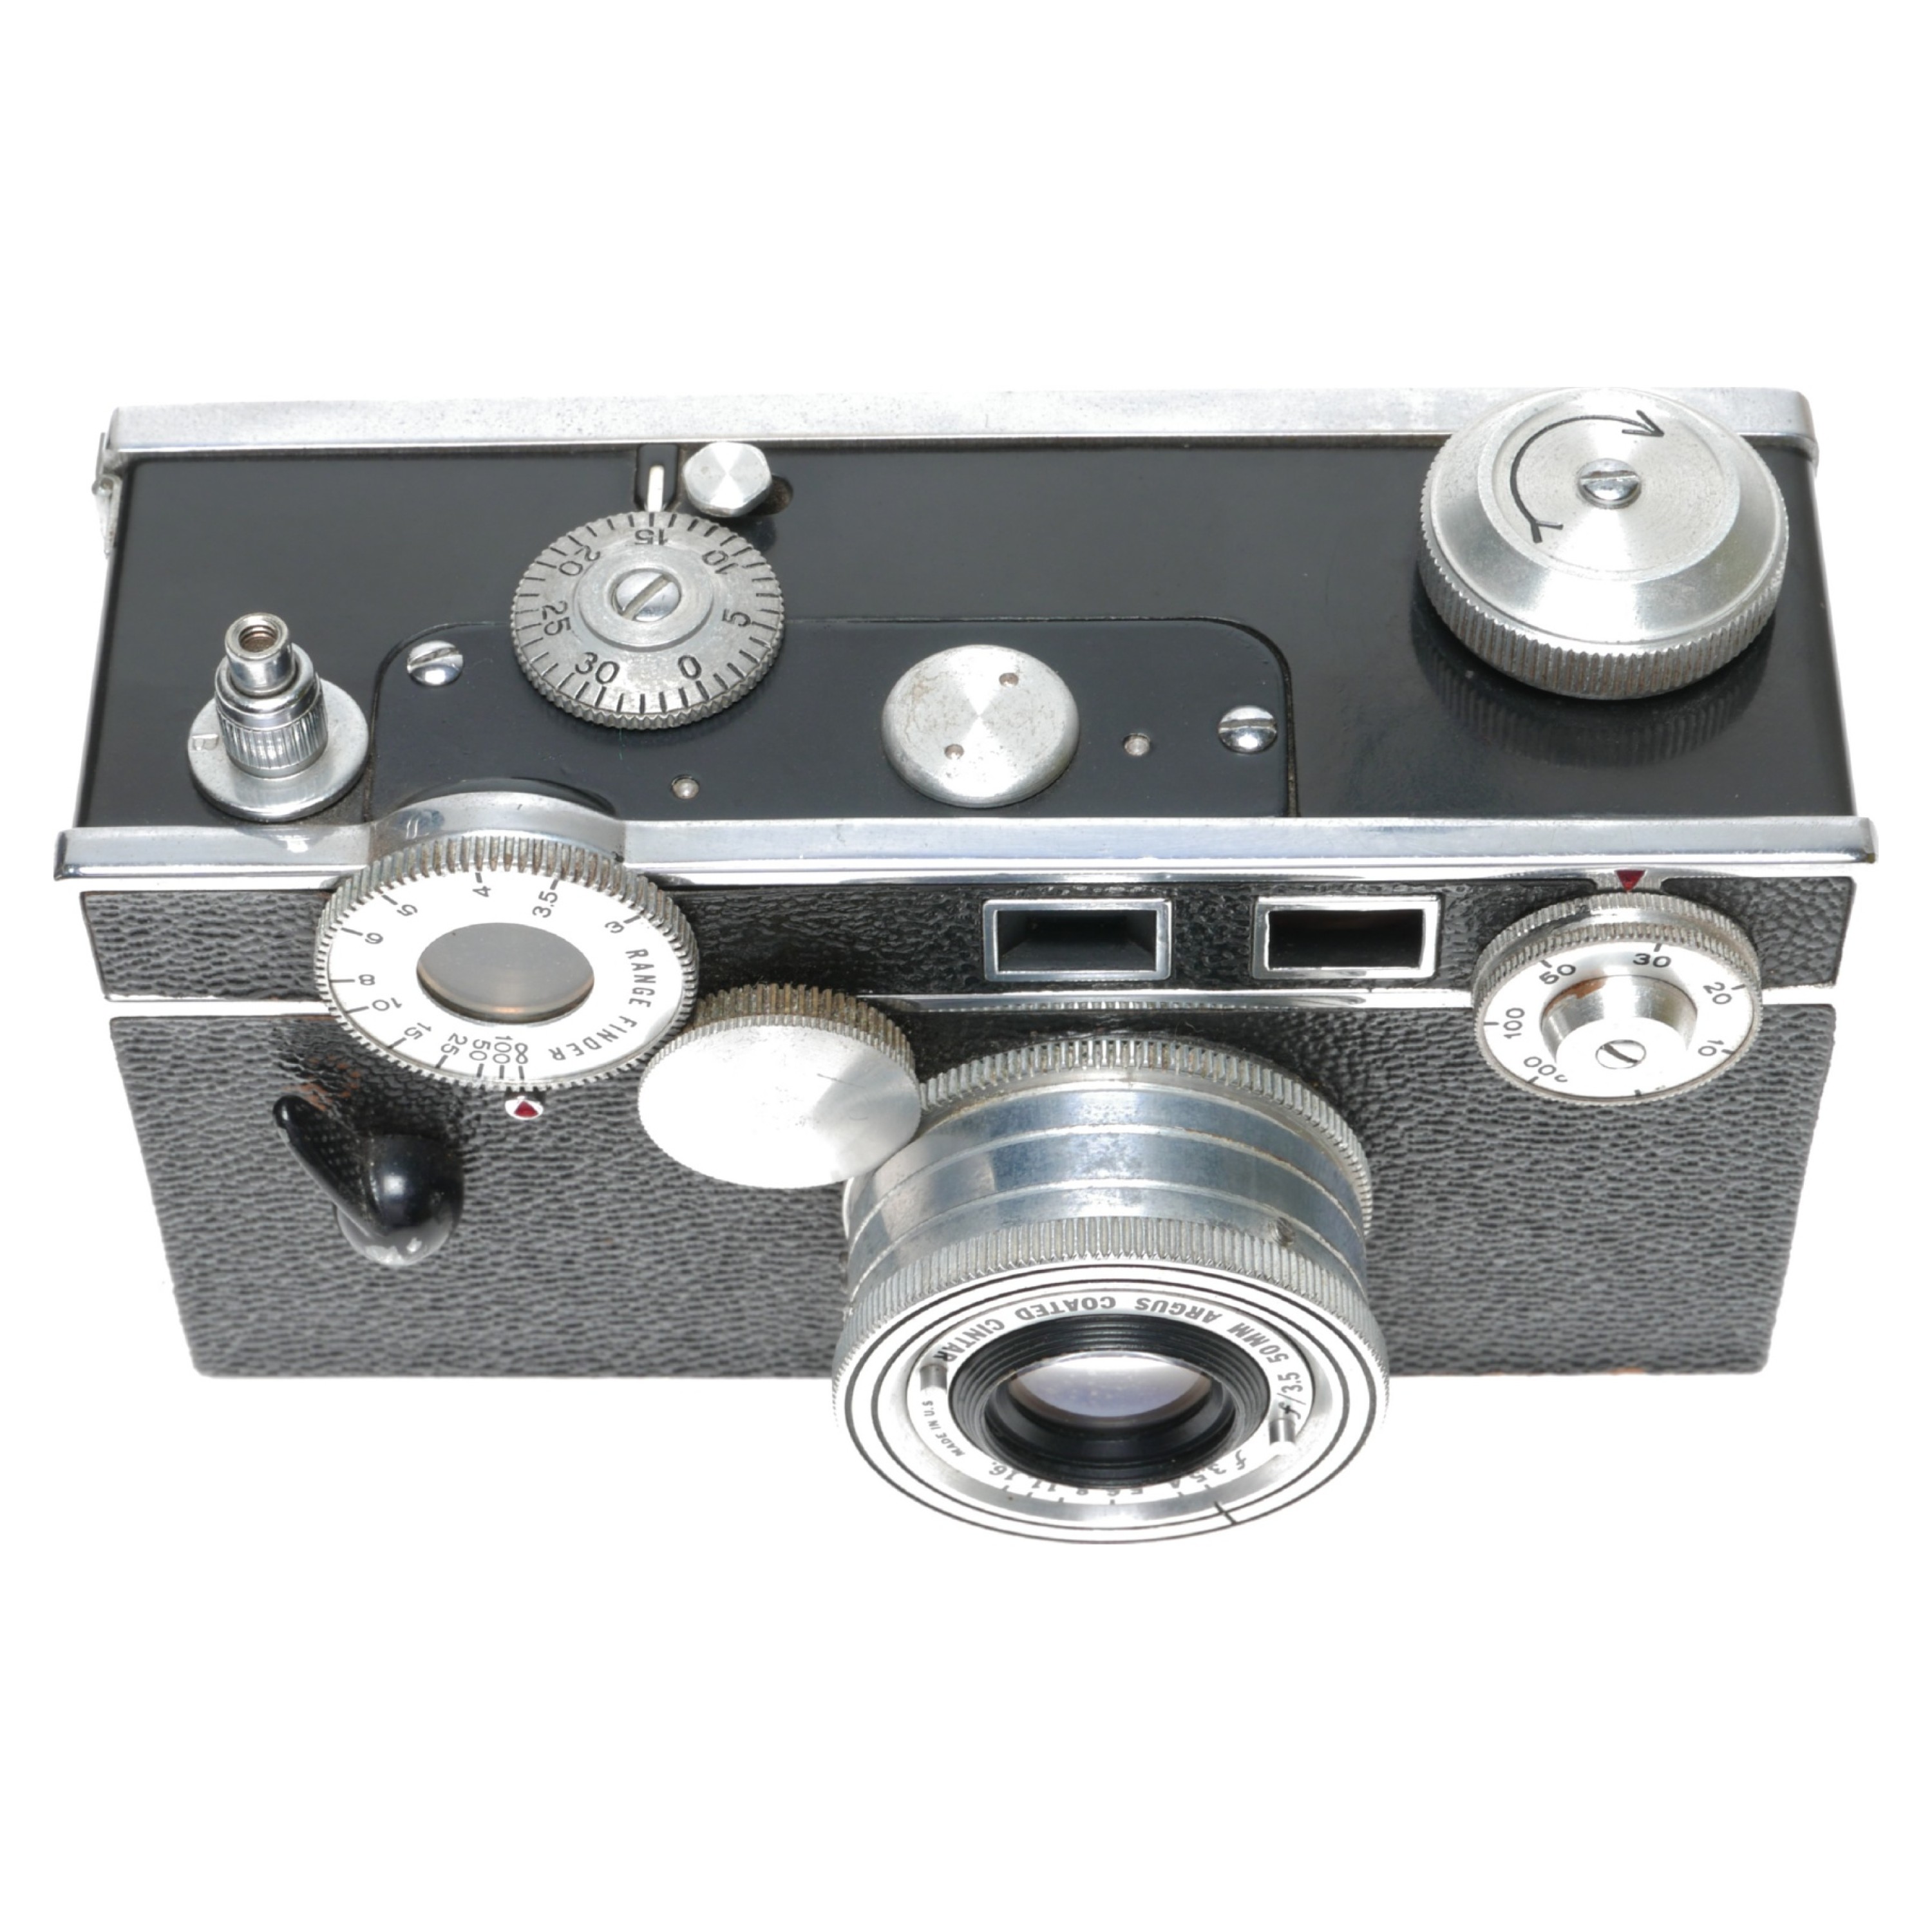 Argus C3 The Brick 35mm Film Rangefinder Camera Cintar f/3.5 50mm